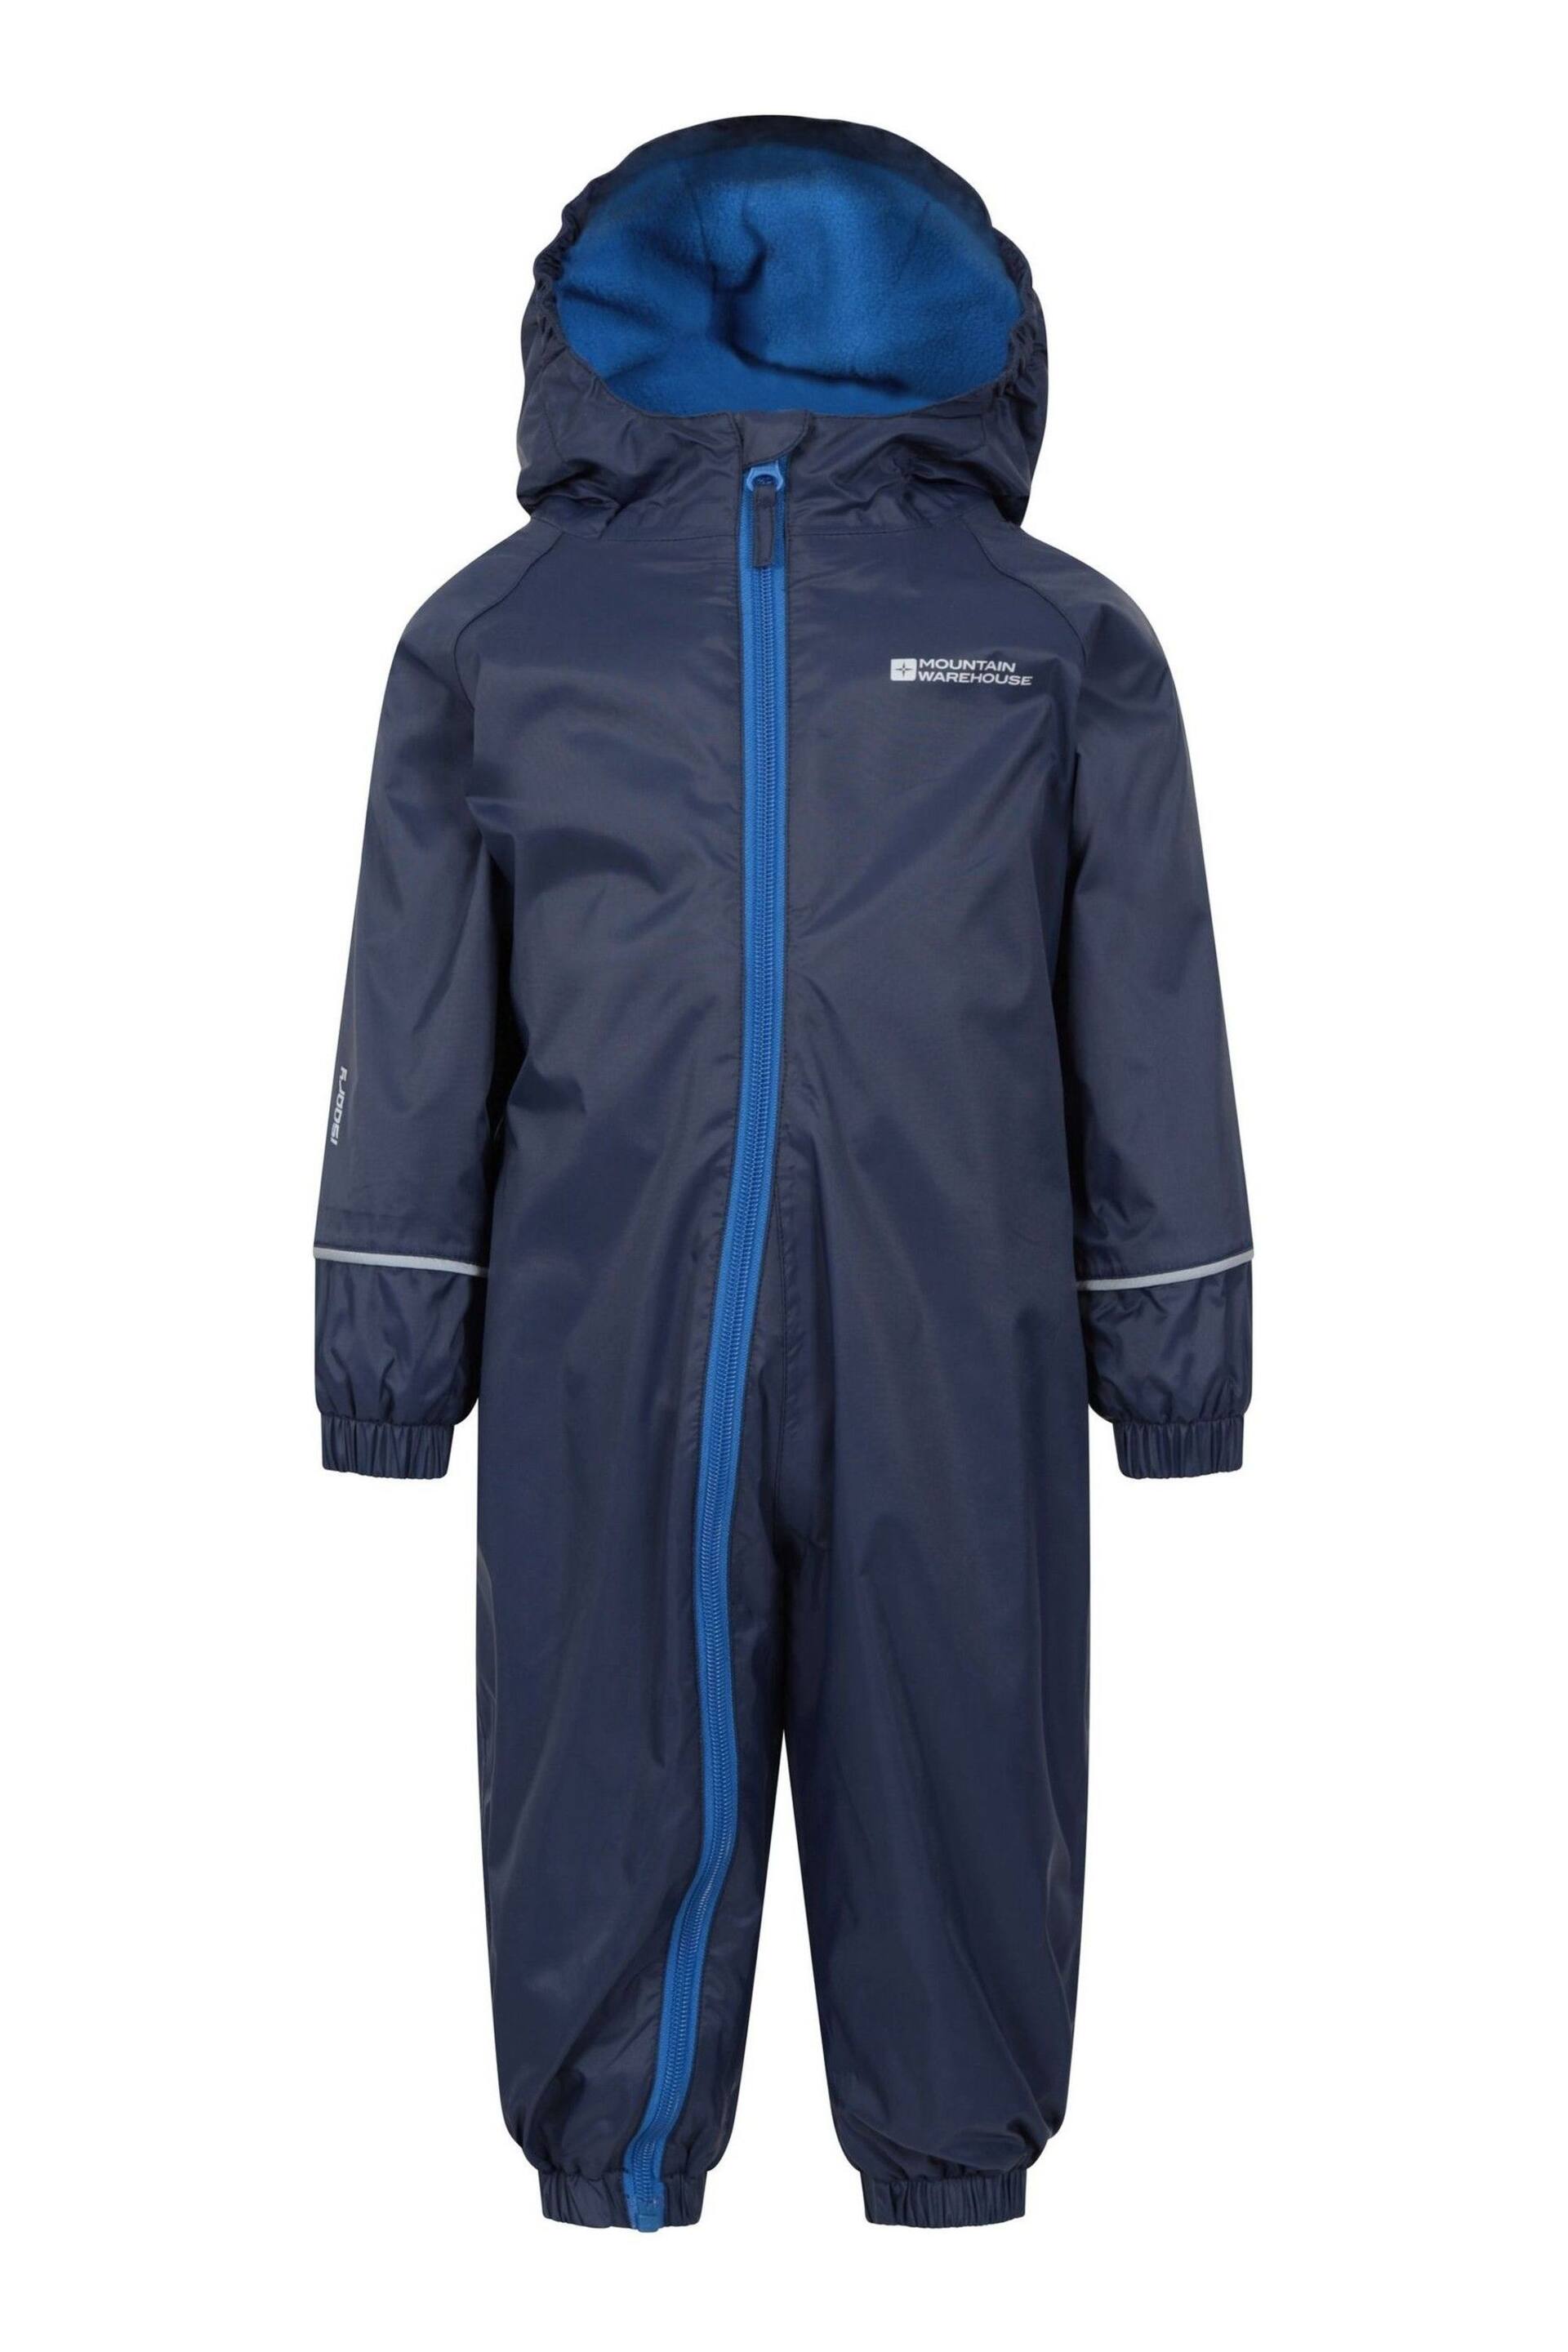 Mountain Warehouse Blue Junior Spright Waterproof Fleece Lined Rainsuit - Image 1 of 5